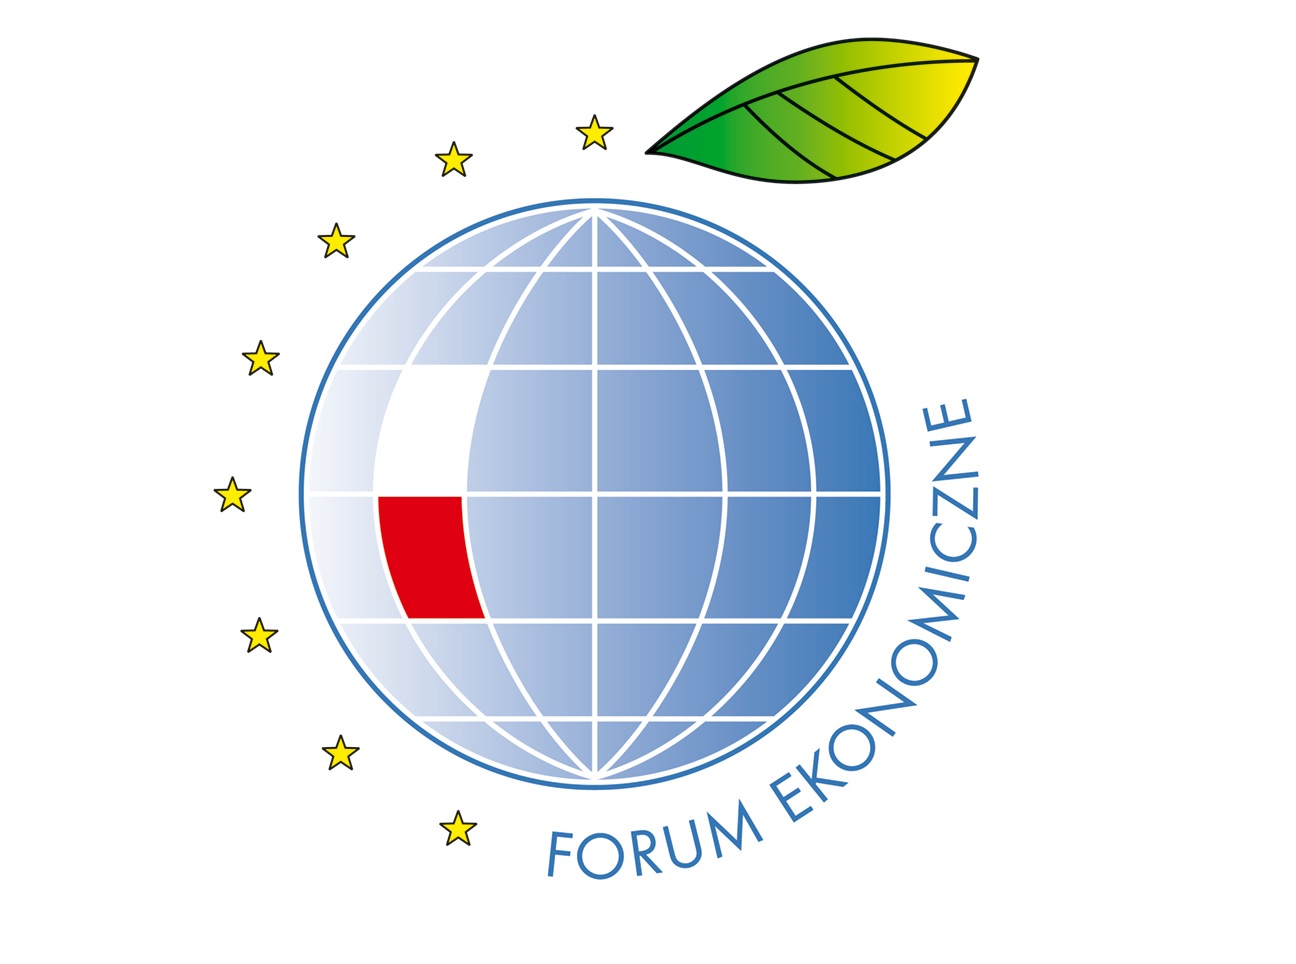 Forum Ekonomiczne